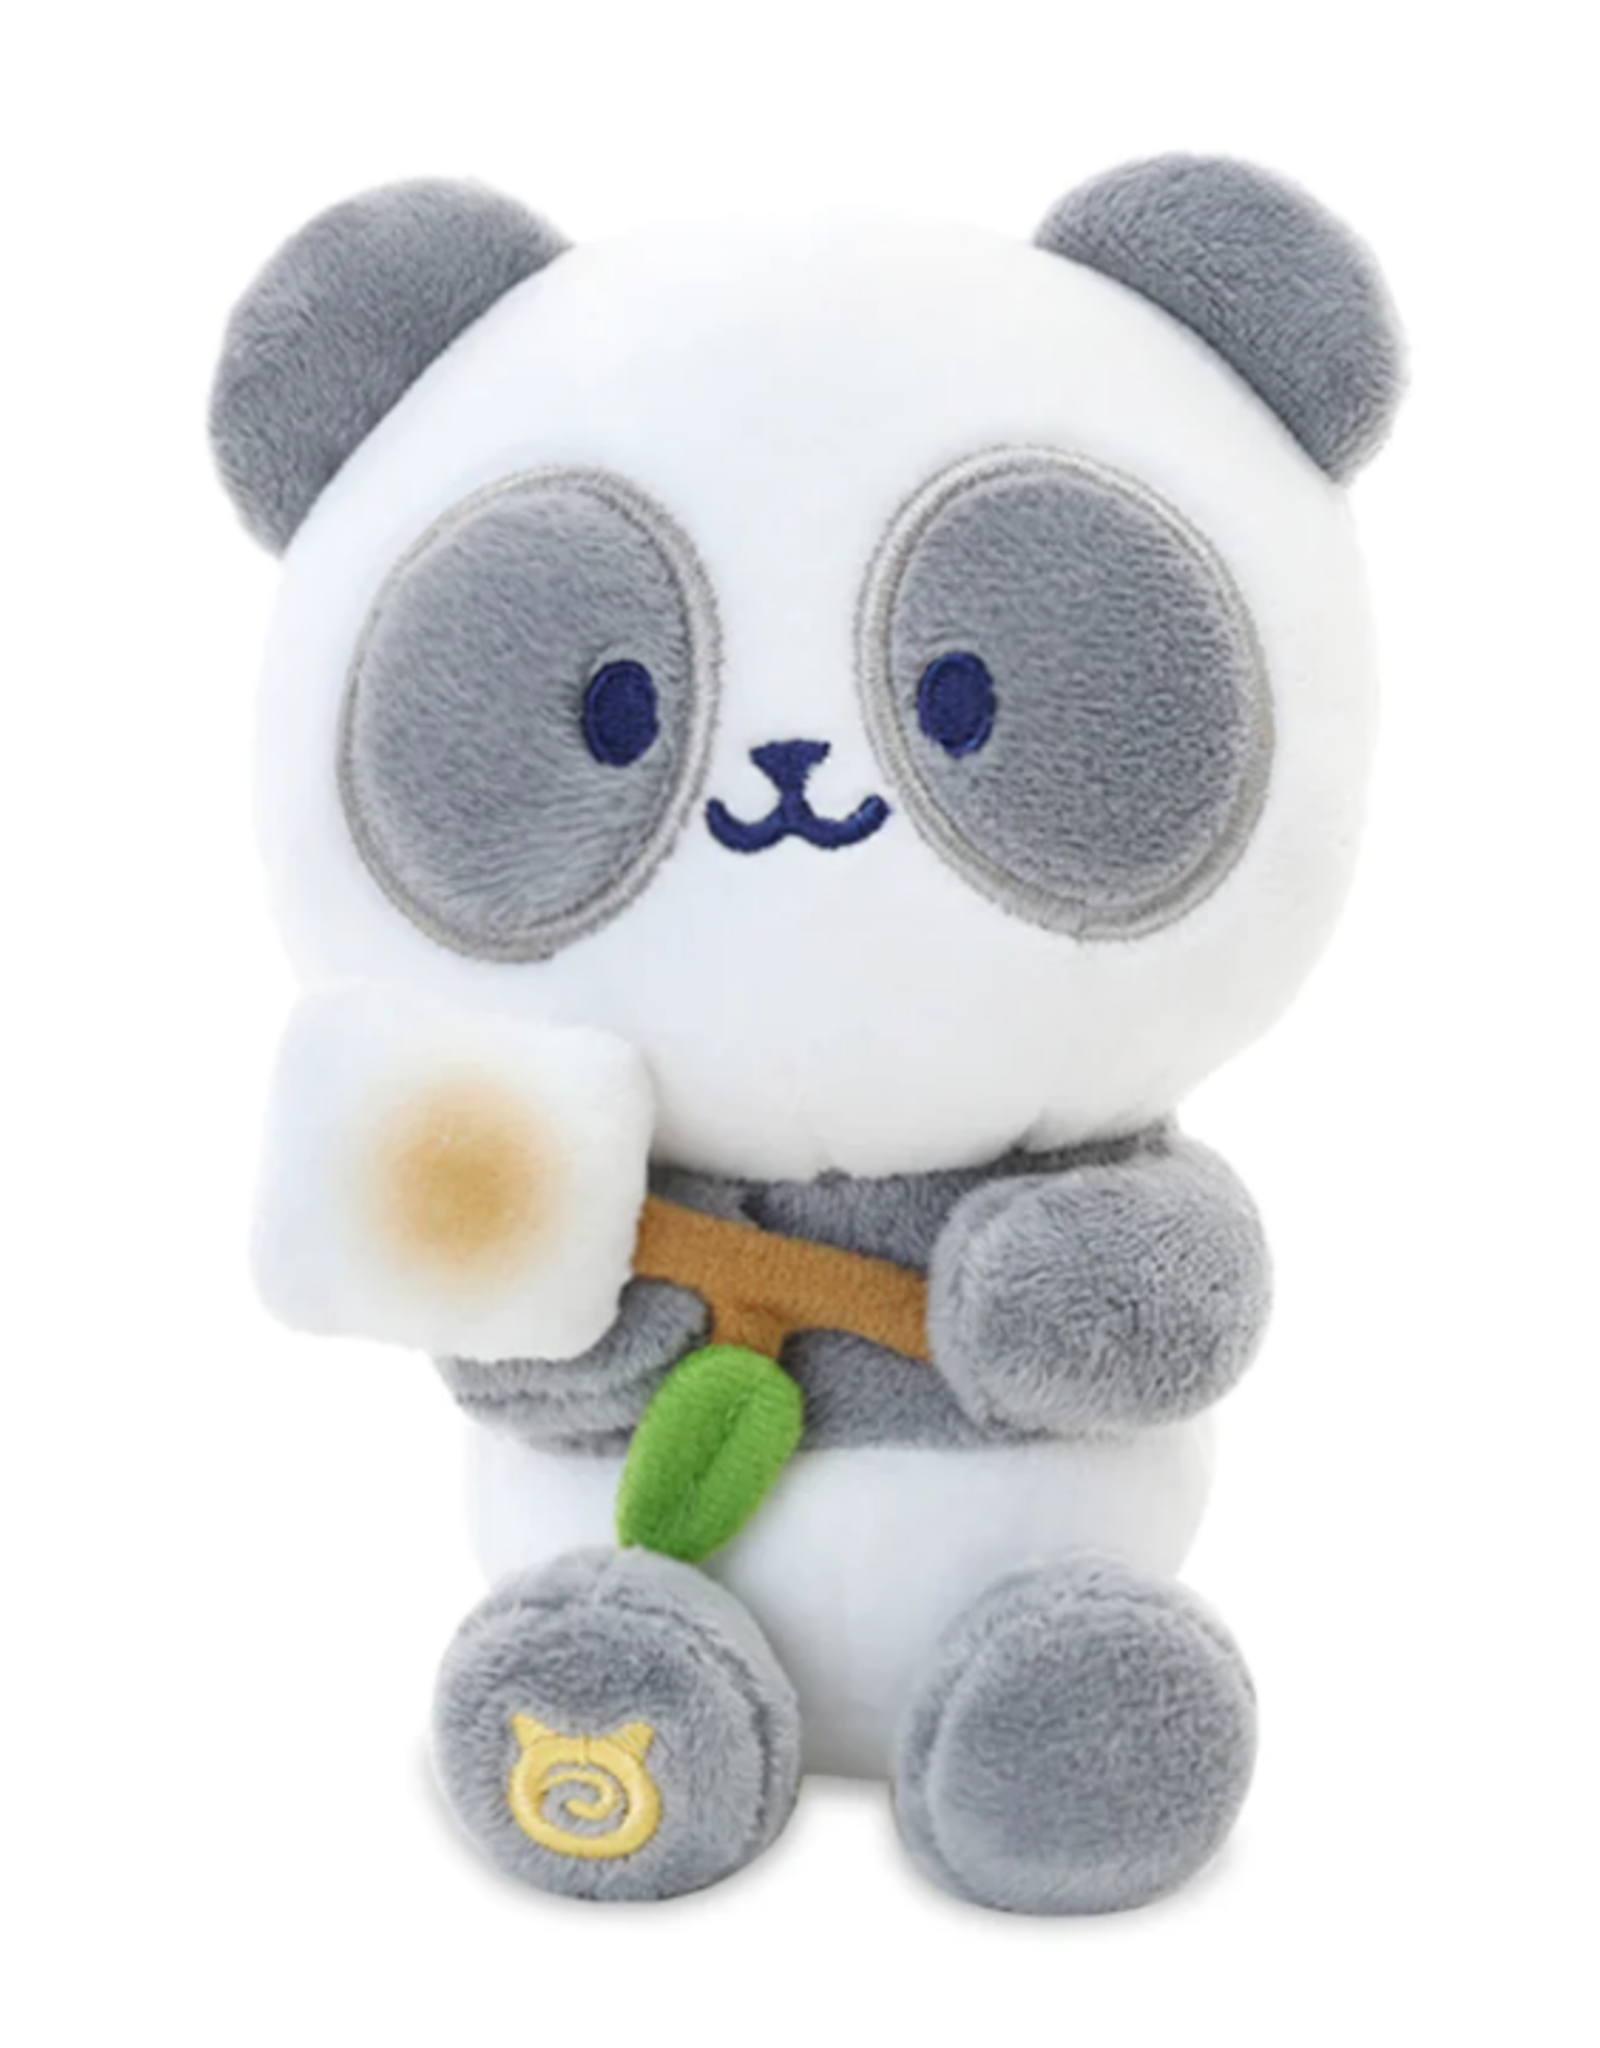 Anirollz Pandaroll Plush Sitting